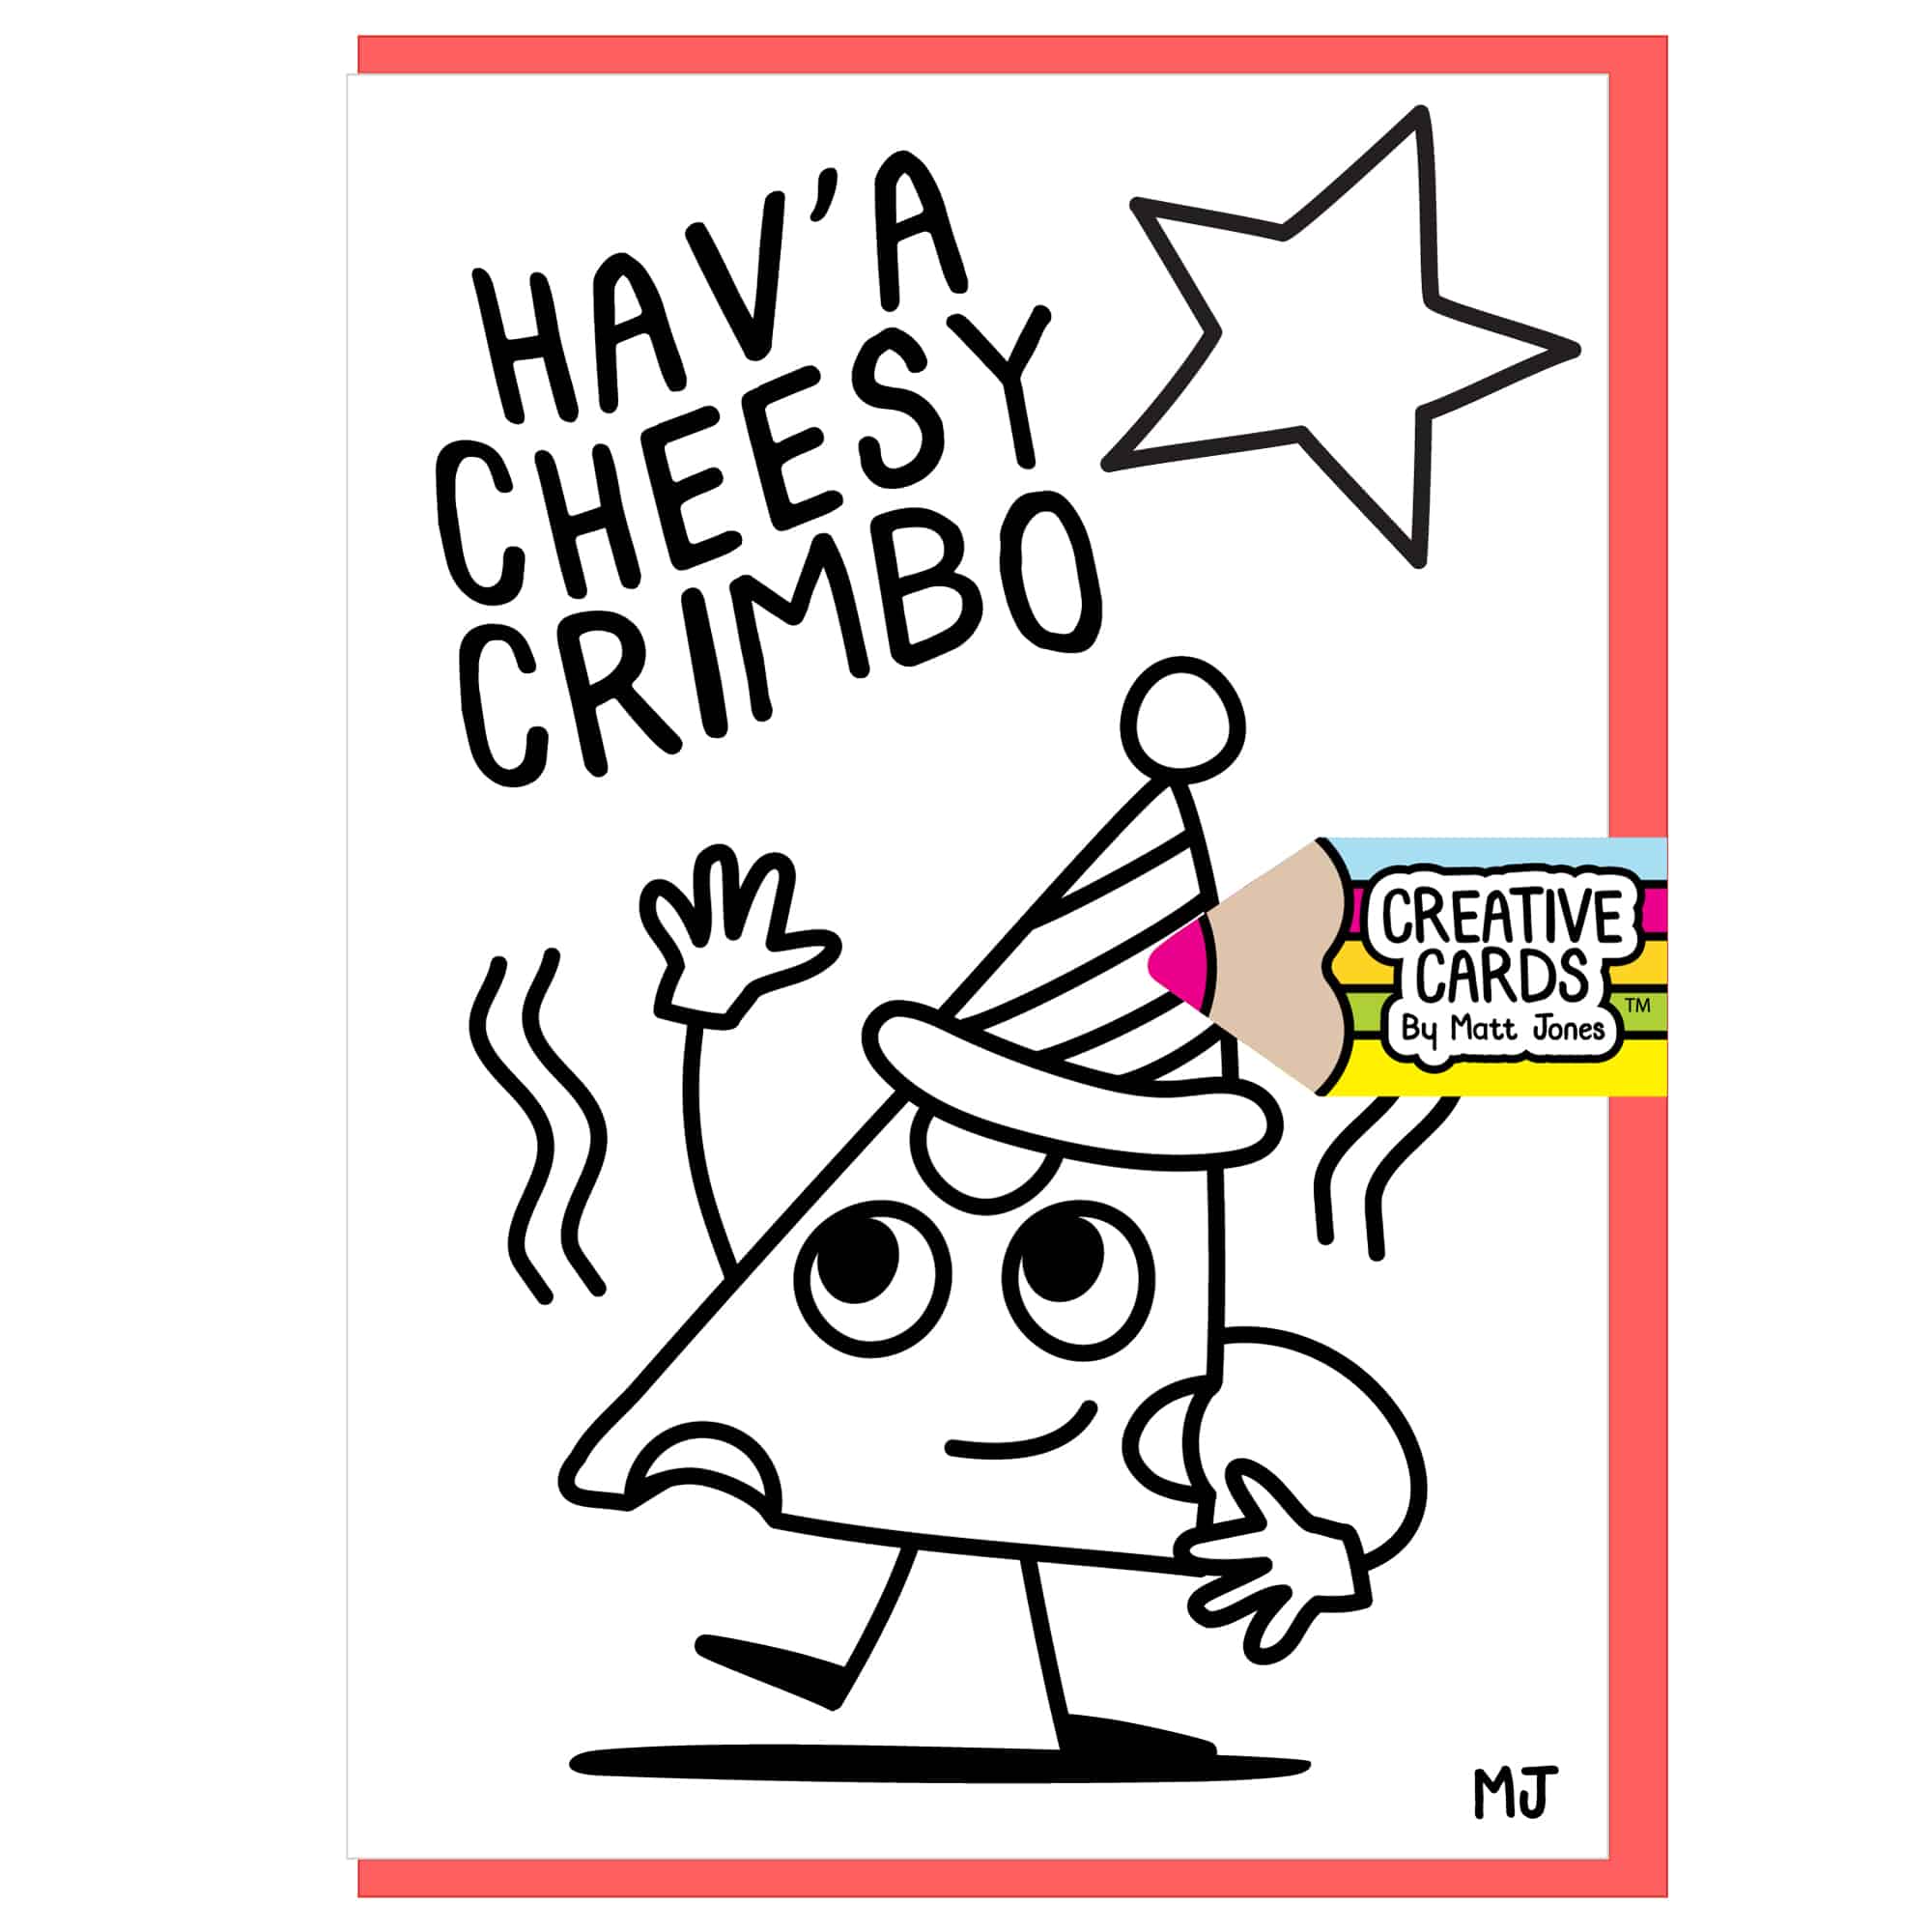 Cheesy-Chrimbo